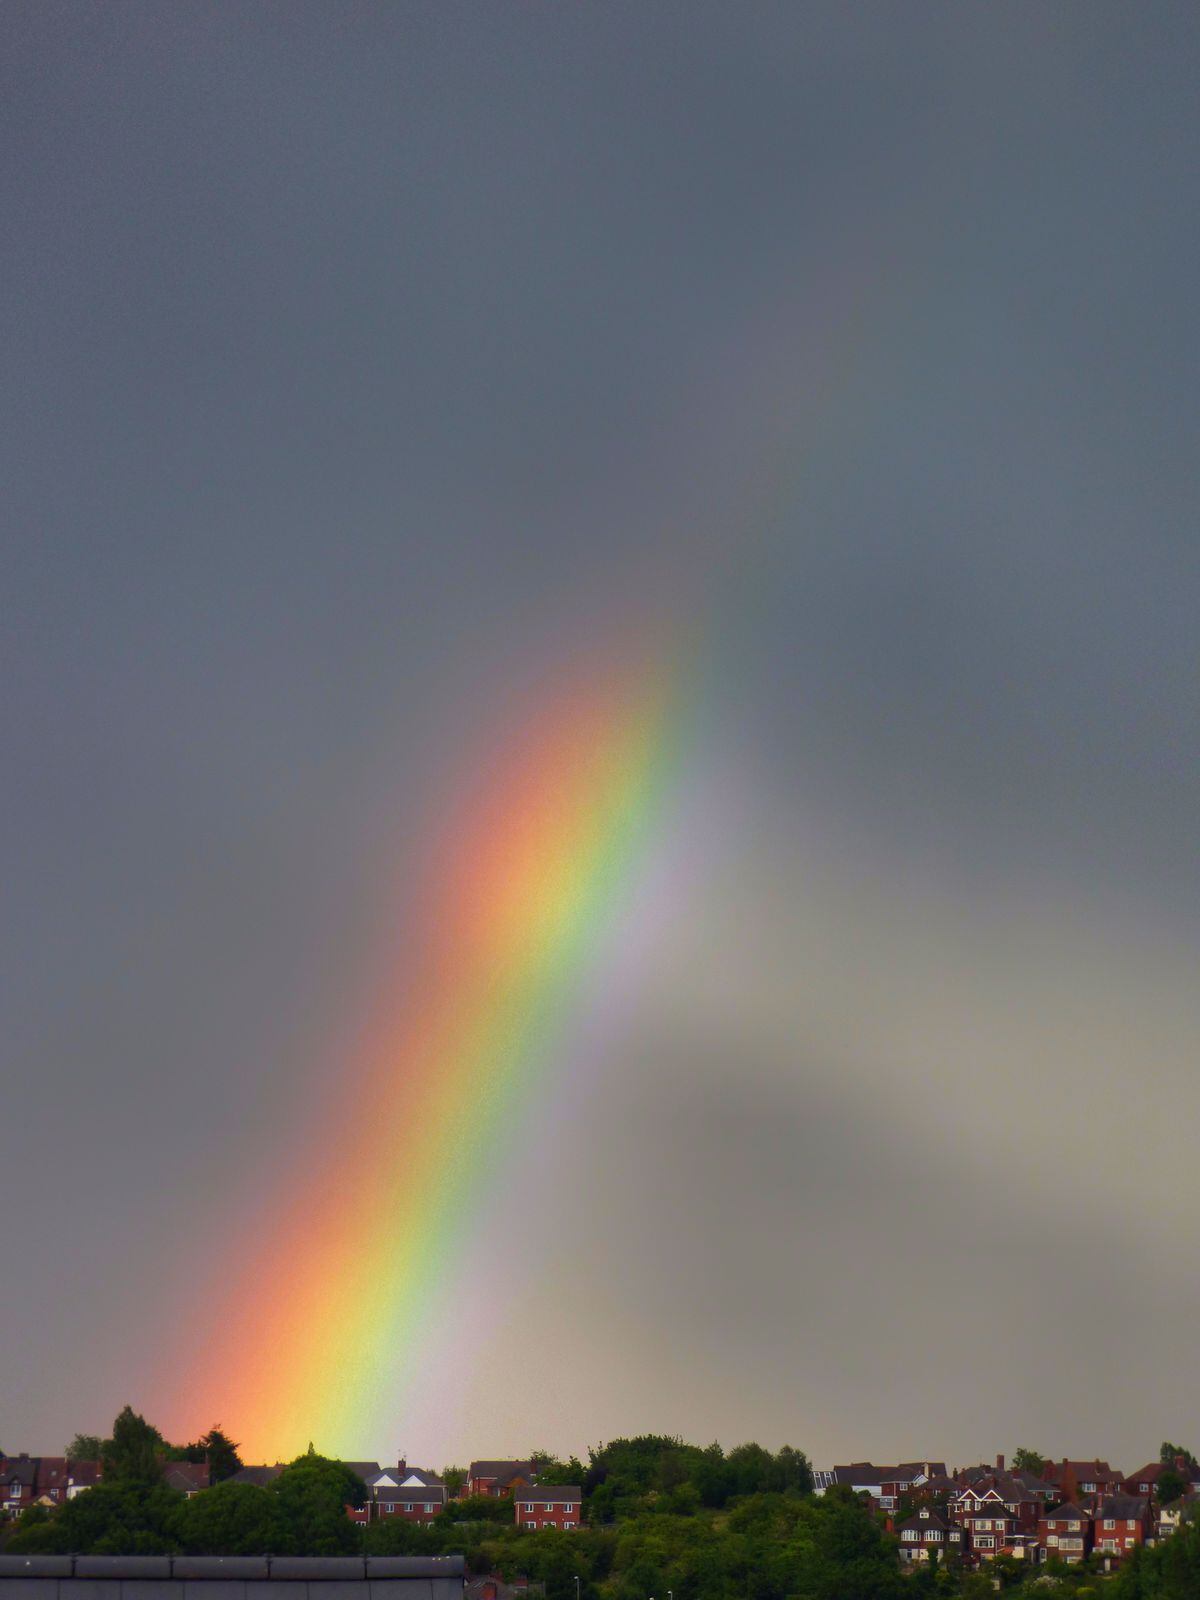 A rainbow in Haden Hill captured by Gemma Cross 